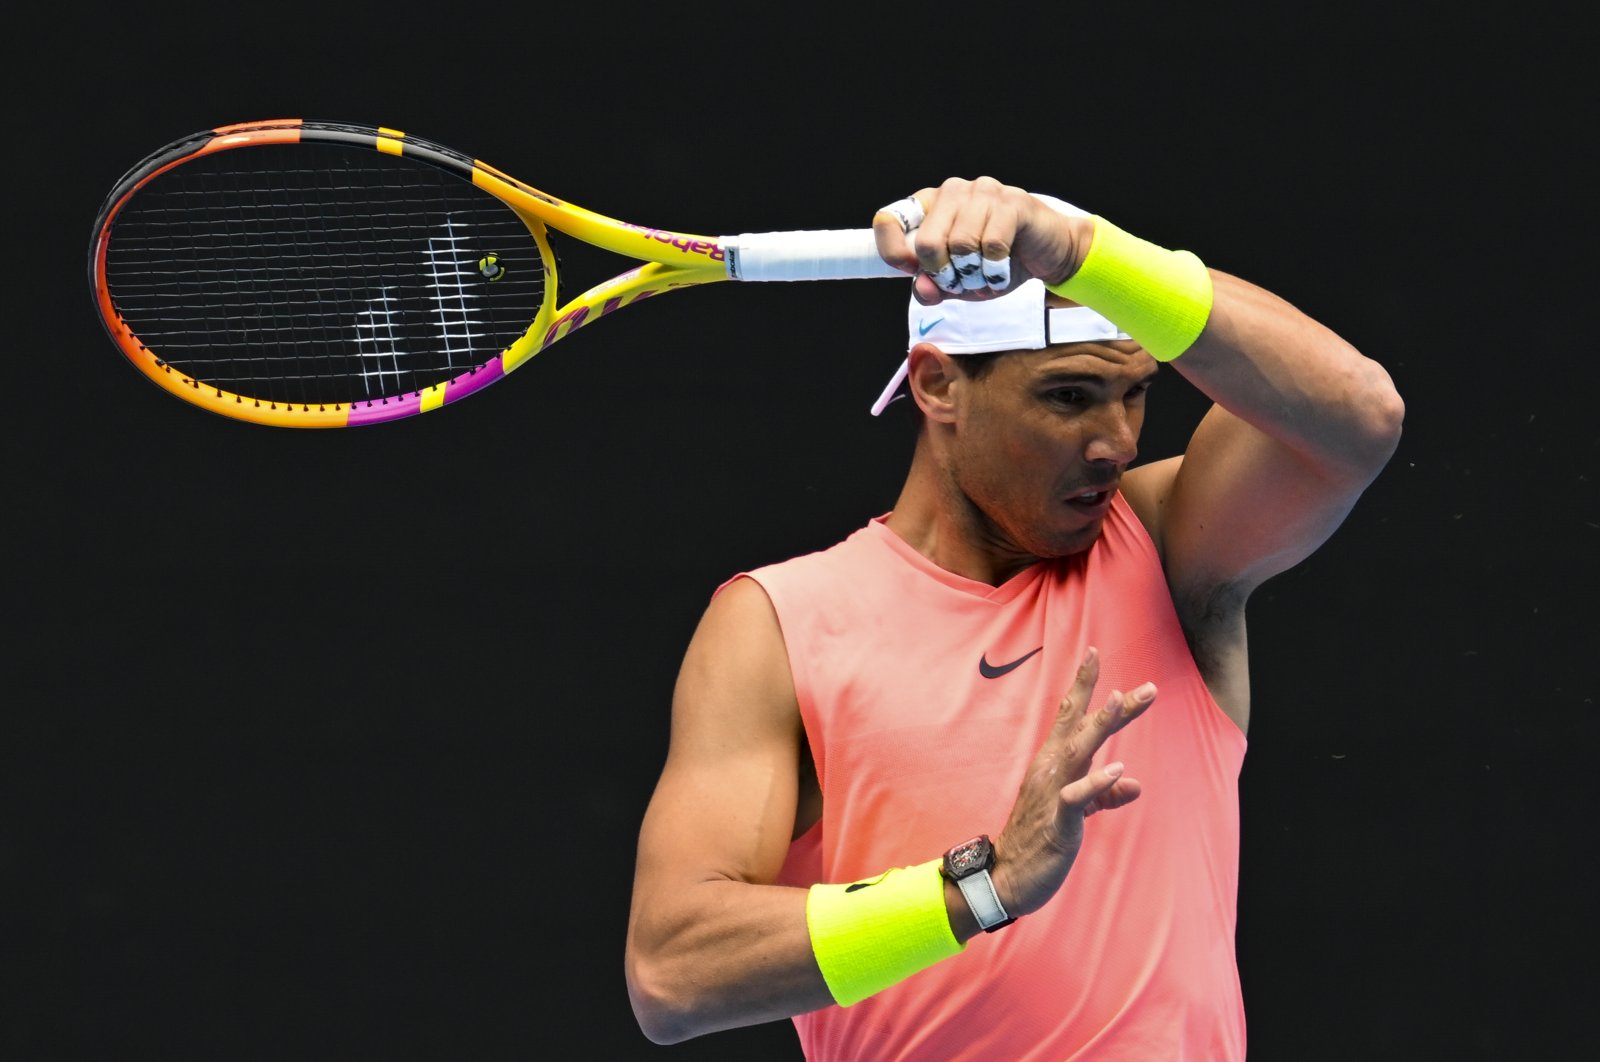 Juara bertahan Nadal menghadapi ujian berat di era baru Australia Terbuka